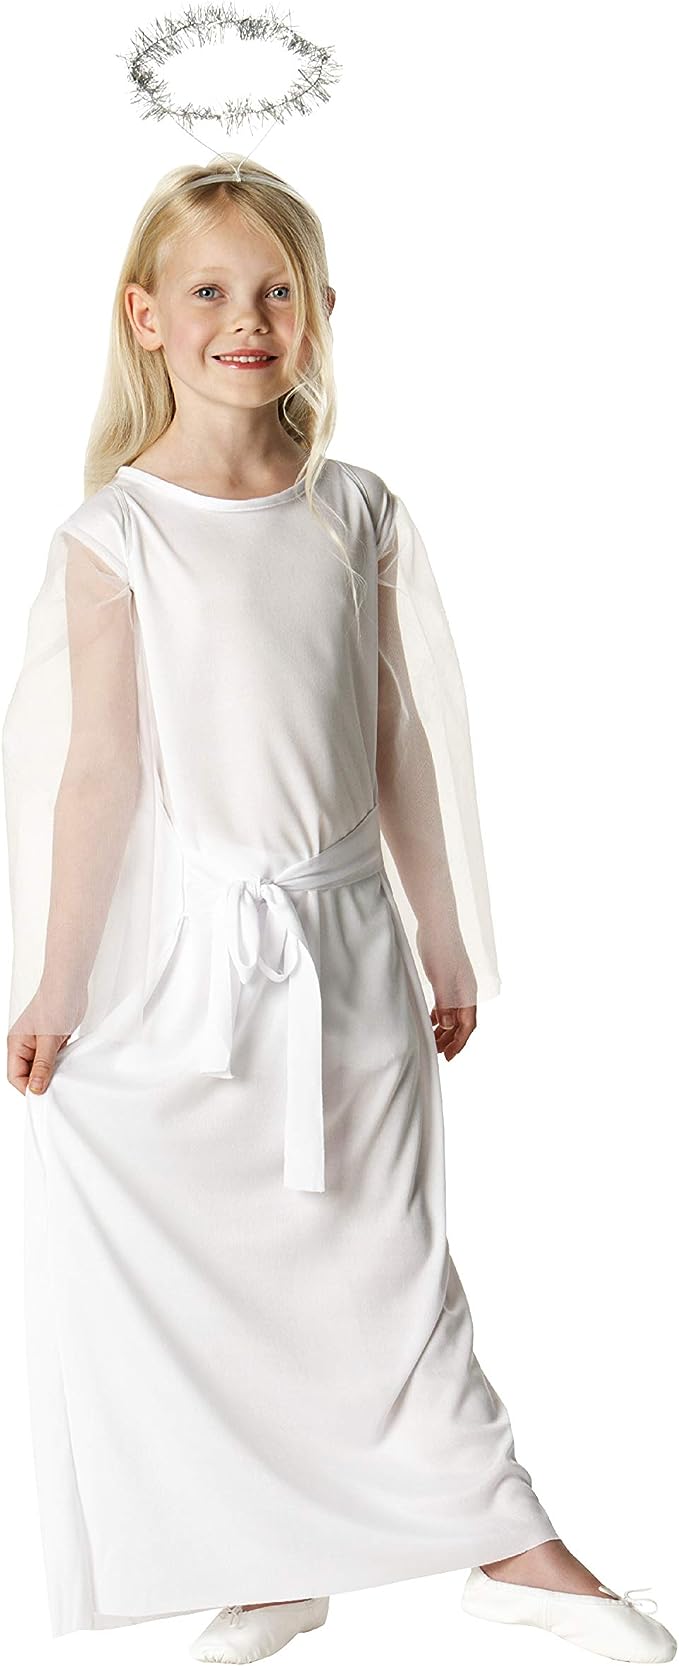 Angel - Child Costume